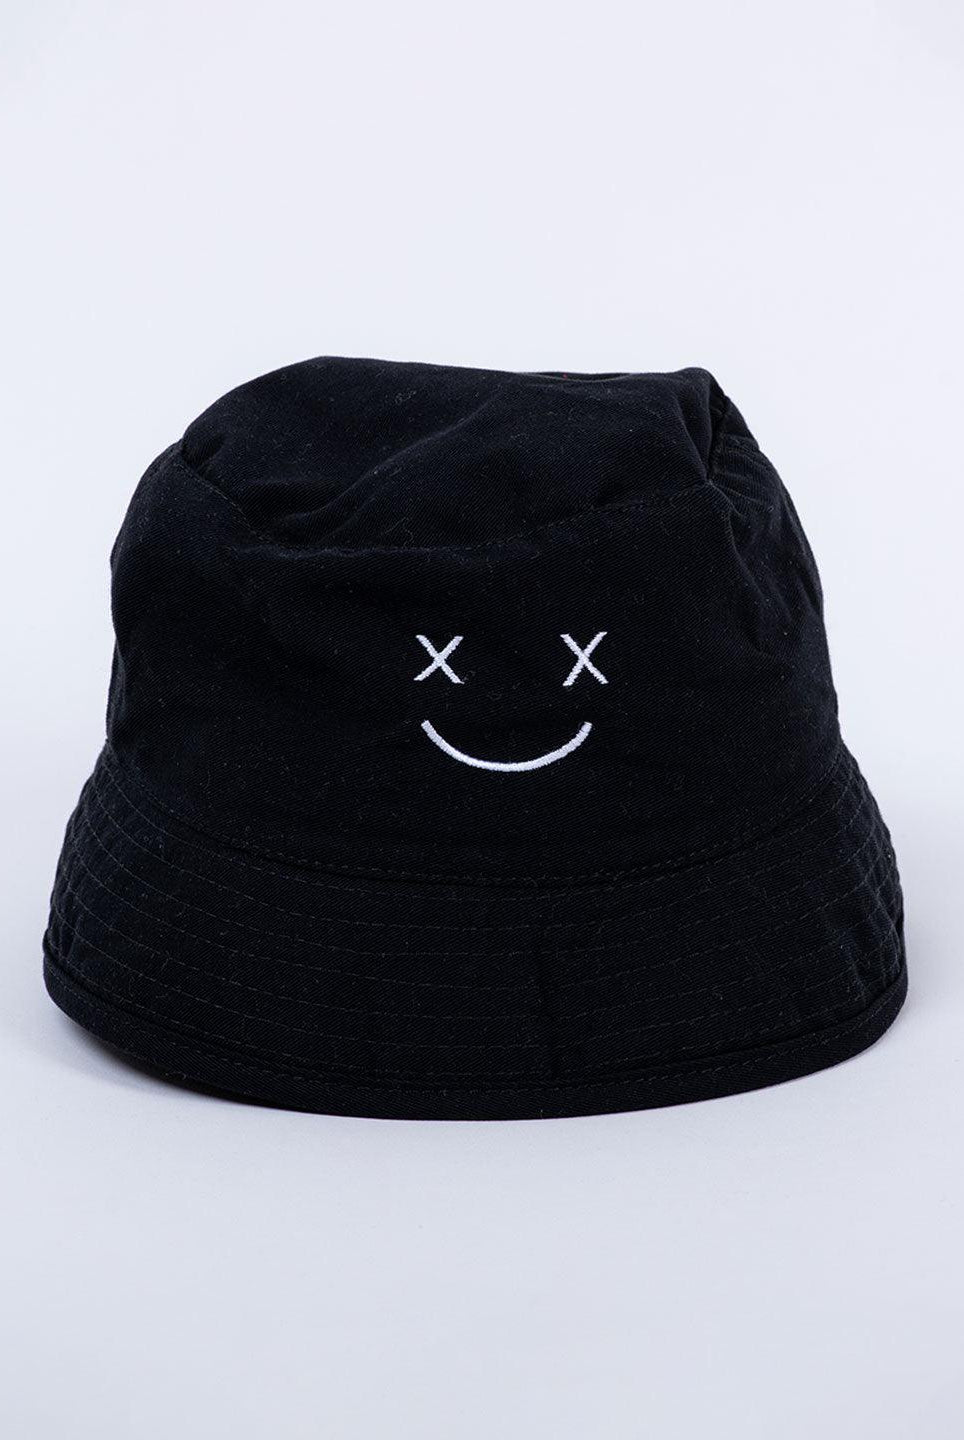 Marshmello Embroidered Black Regular Size Unisex Hat - Tistabene